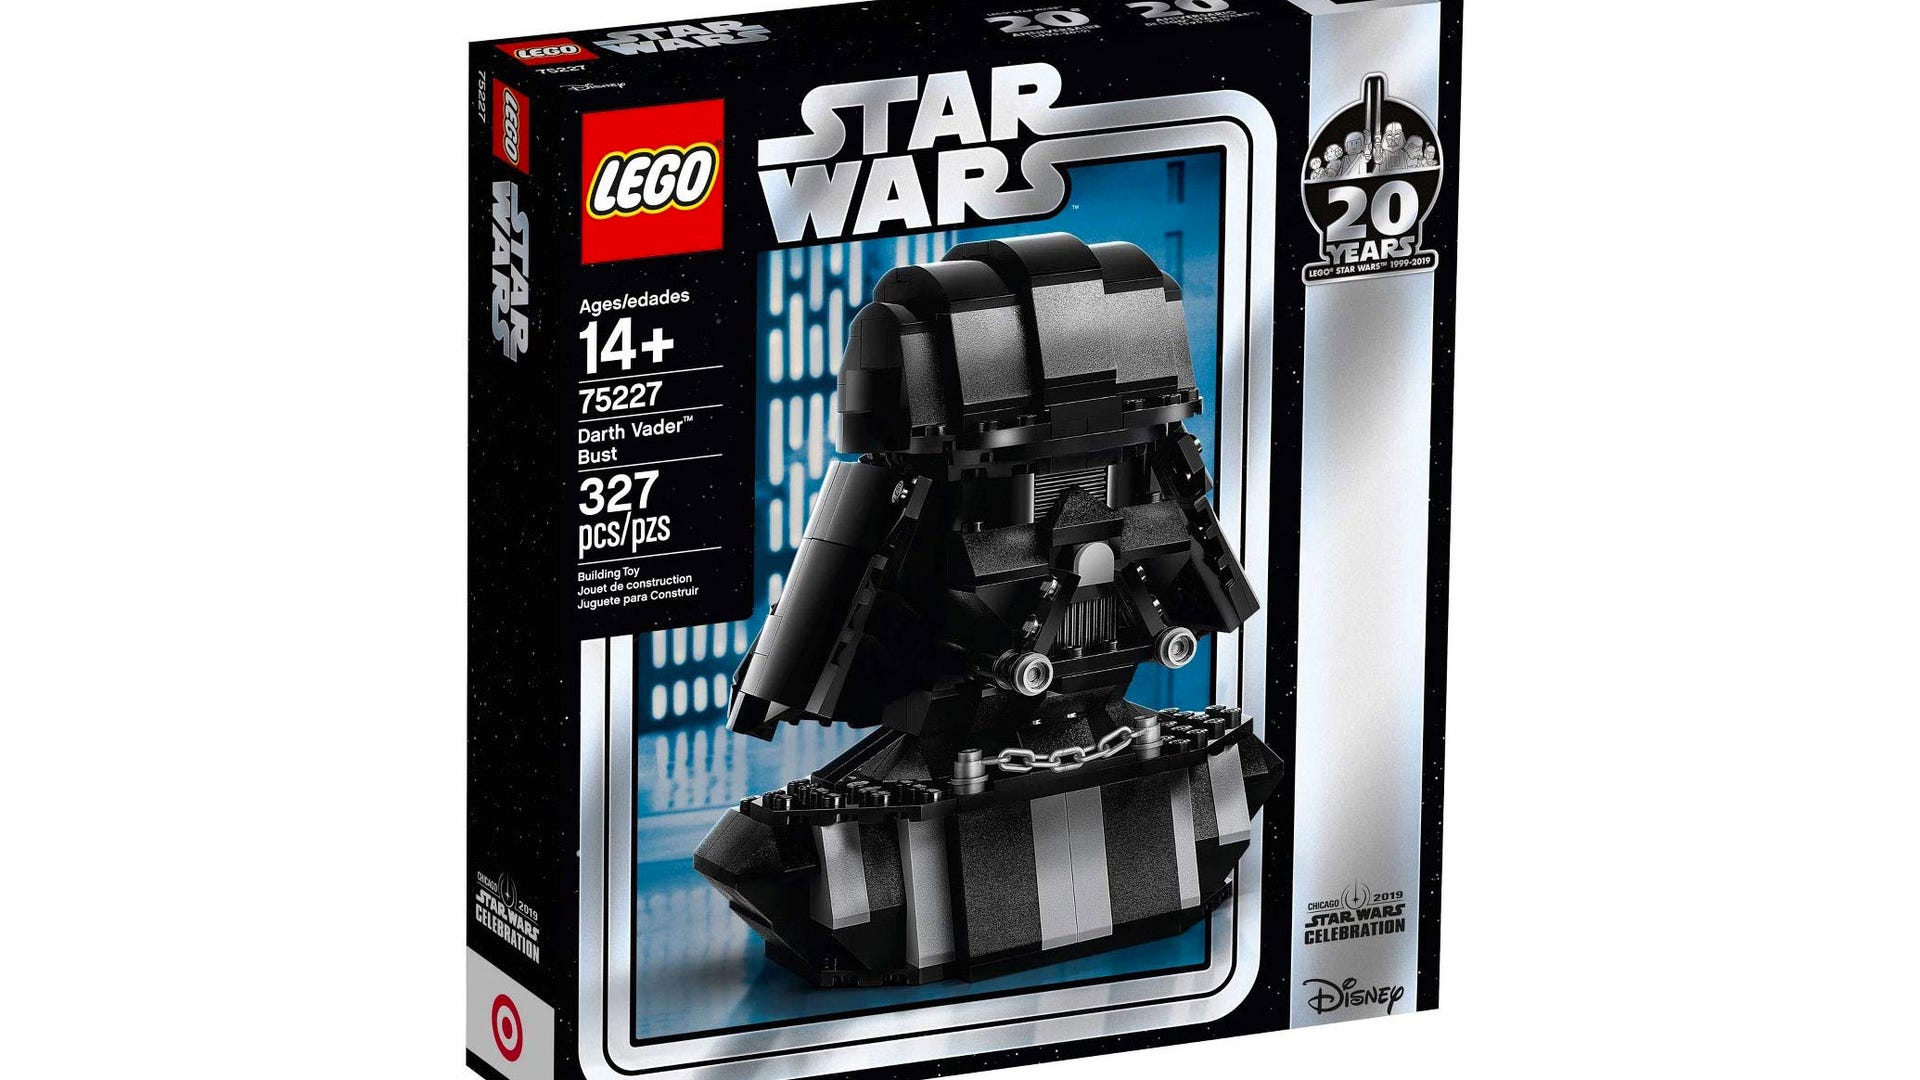 Star Wars Darth Vader LEGO Bust